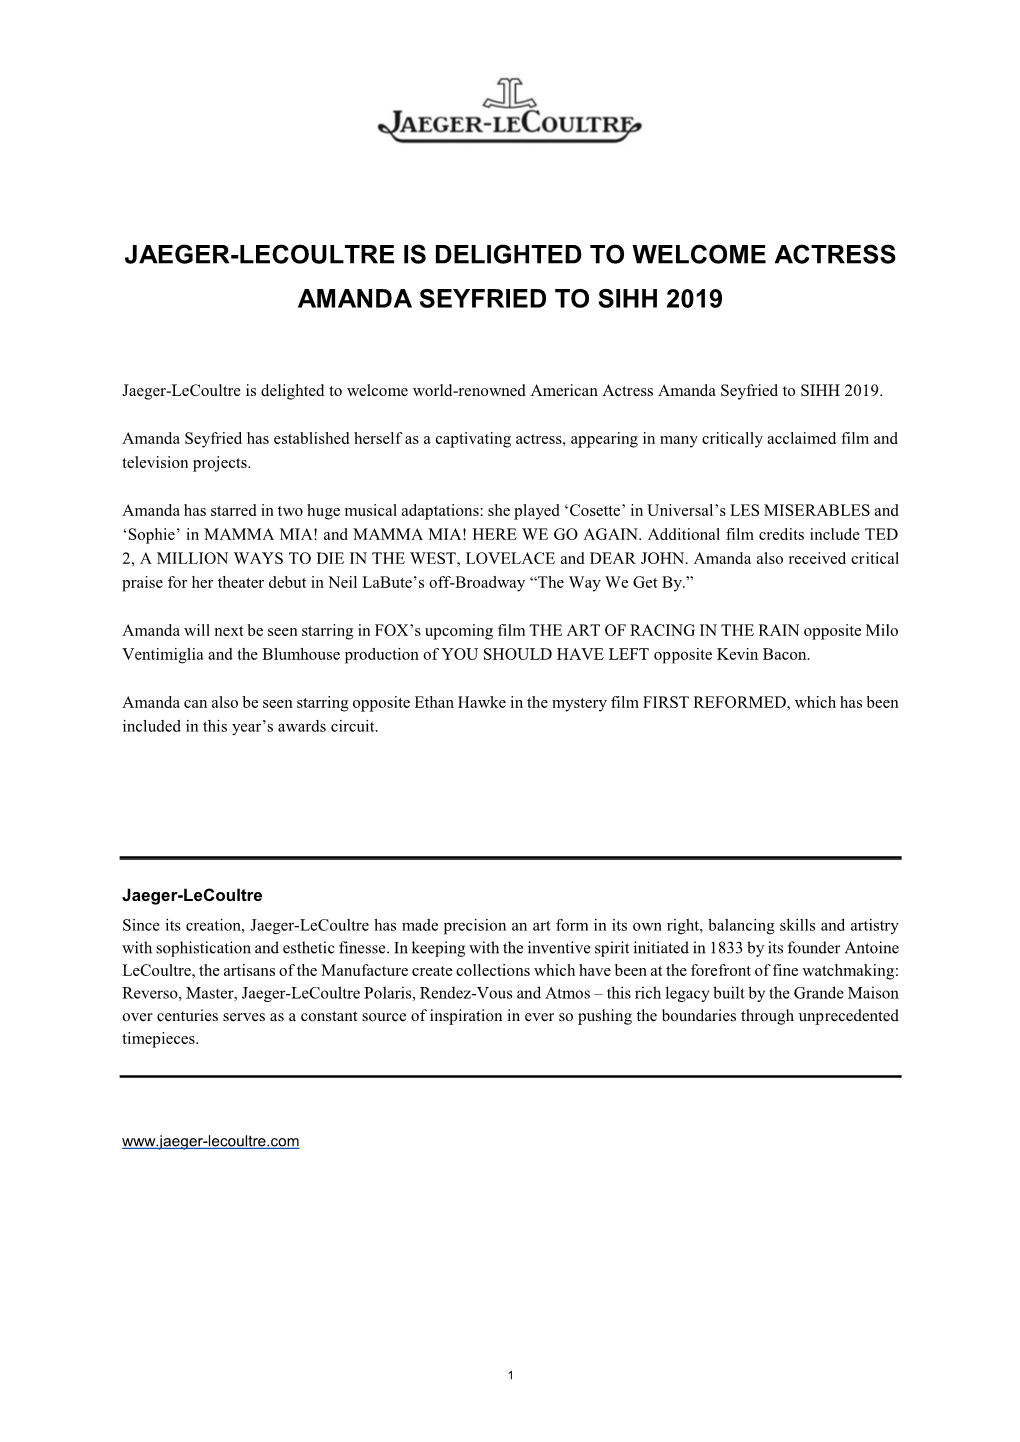 Press Release Amanda Seyfried